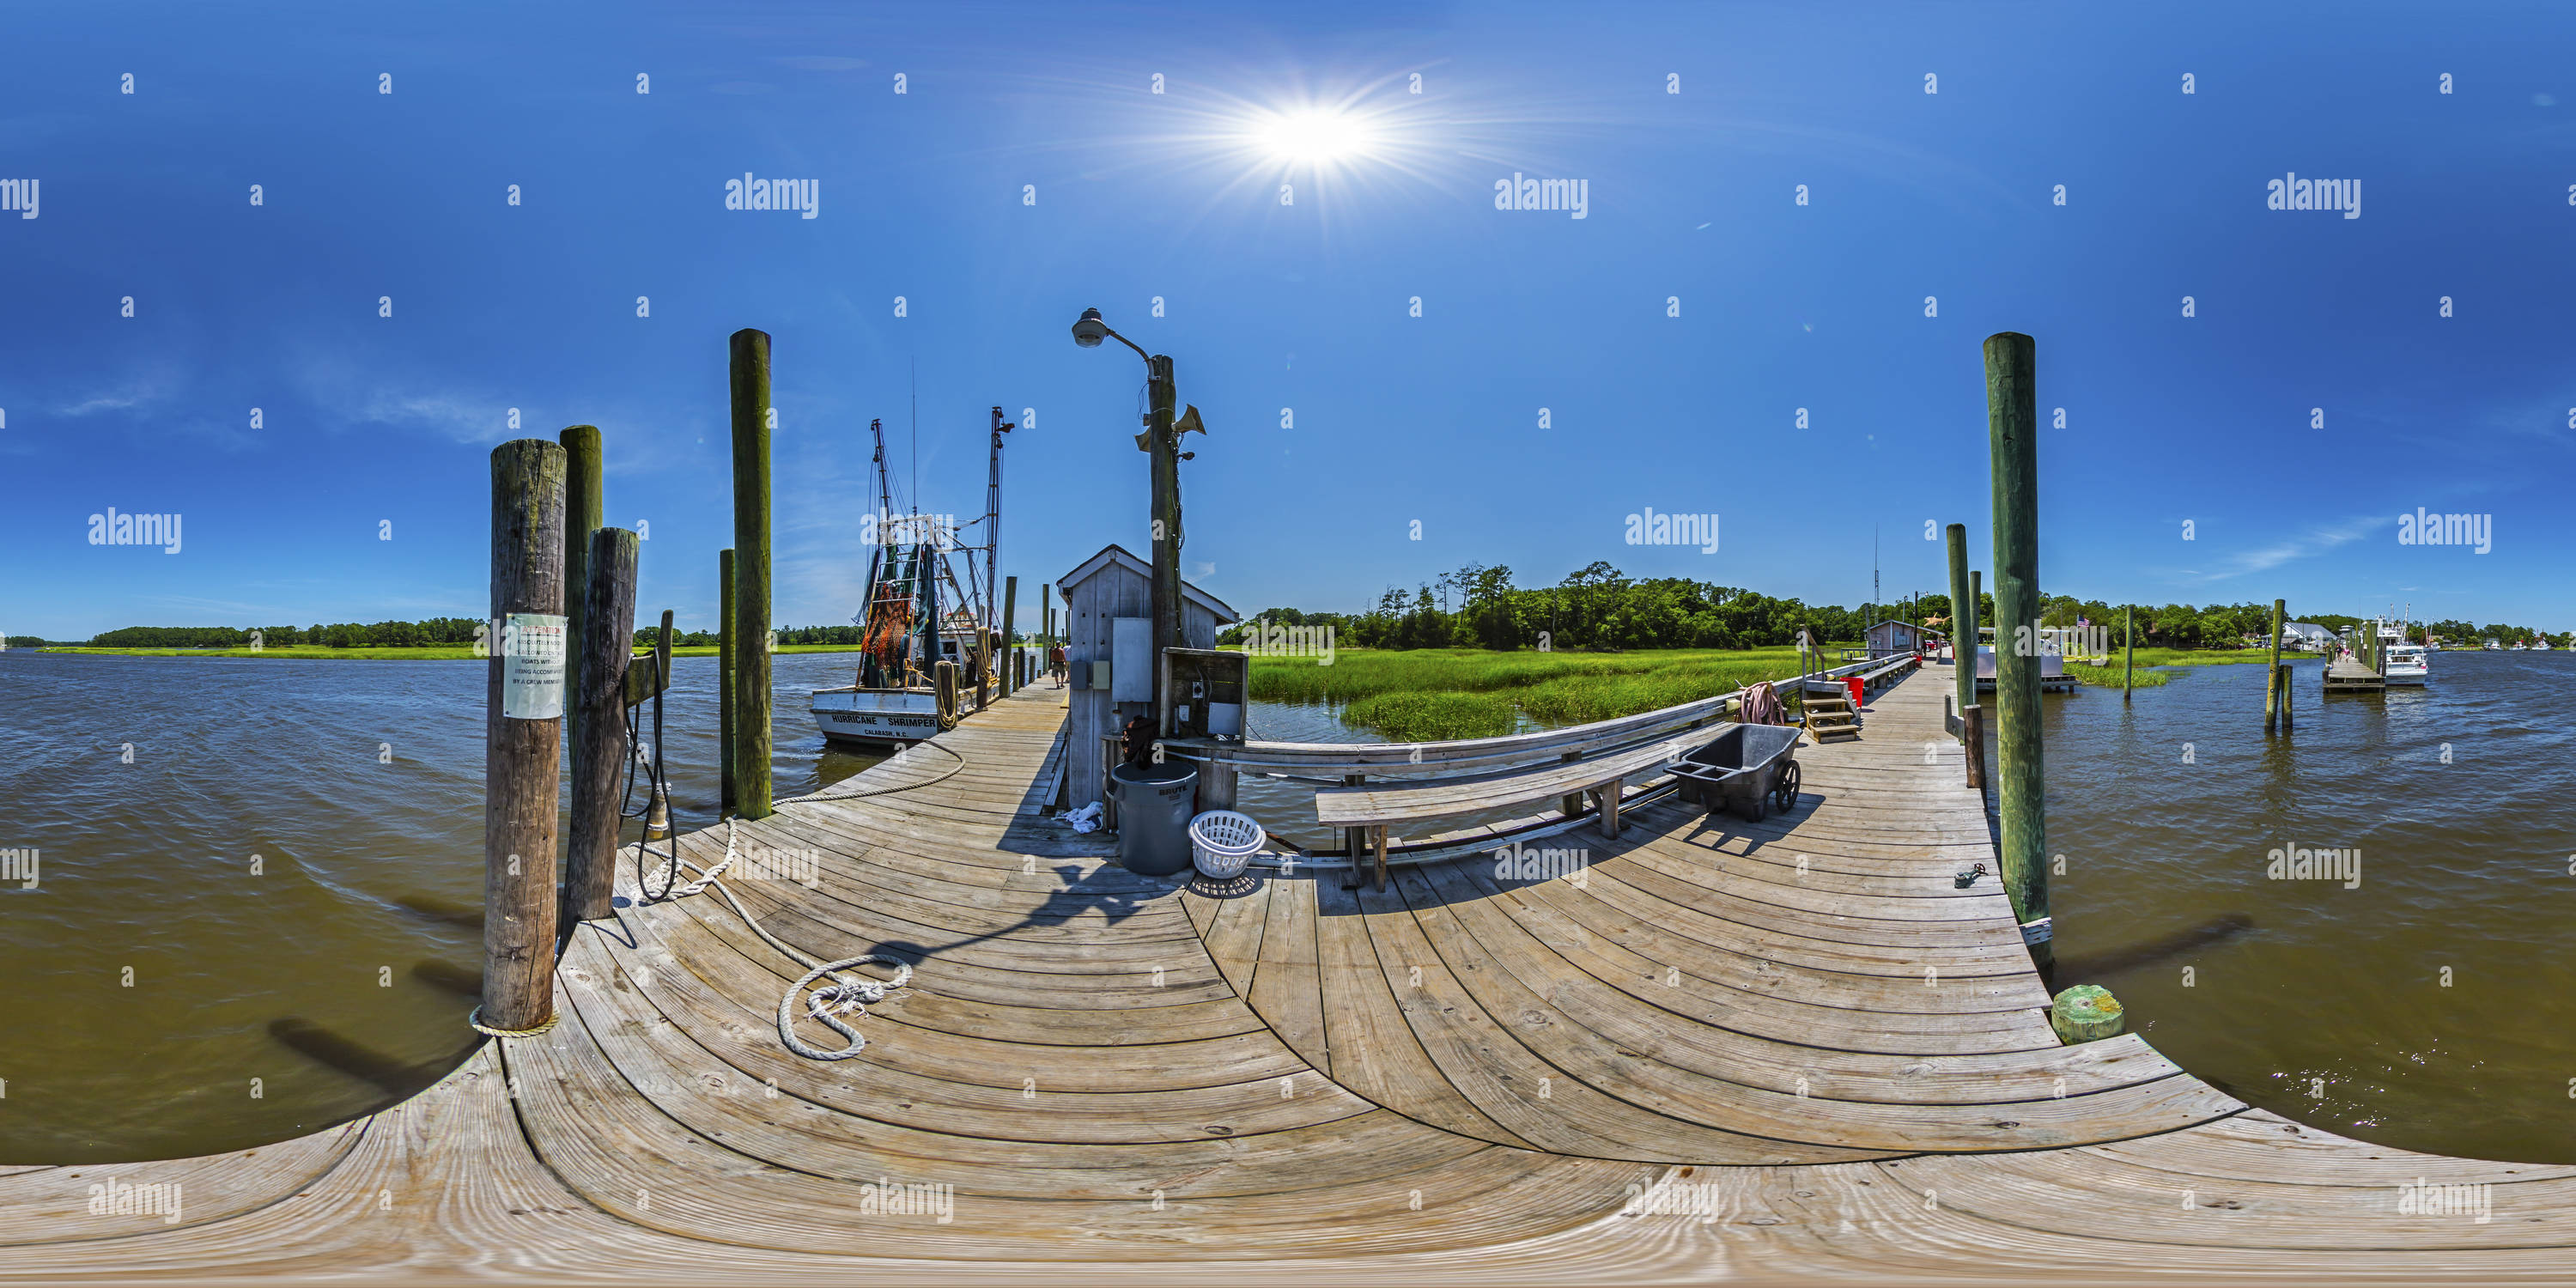 360 degree panoramic view of Calabash Docks, Calabash, North Carolina